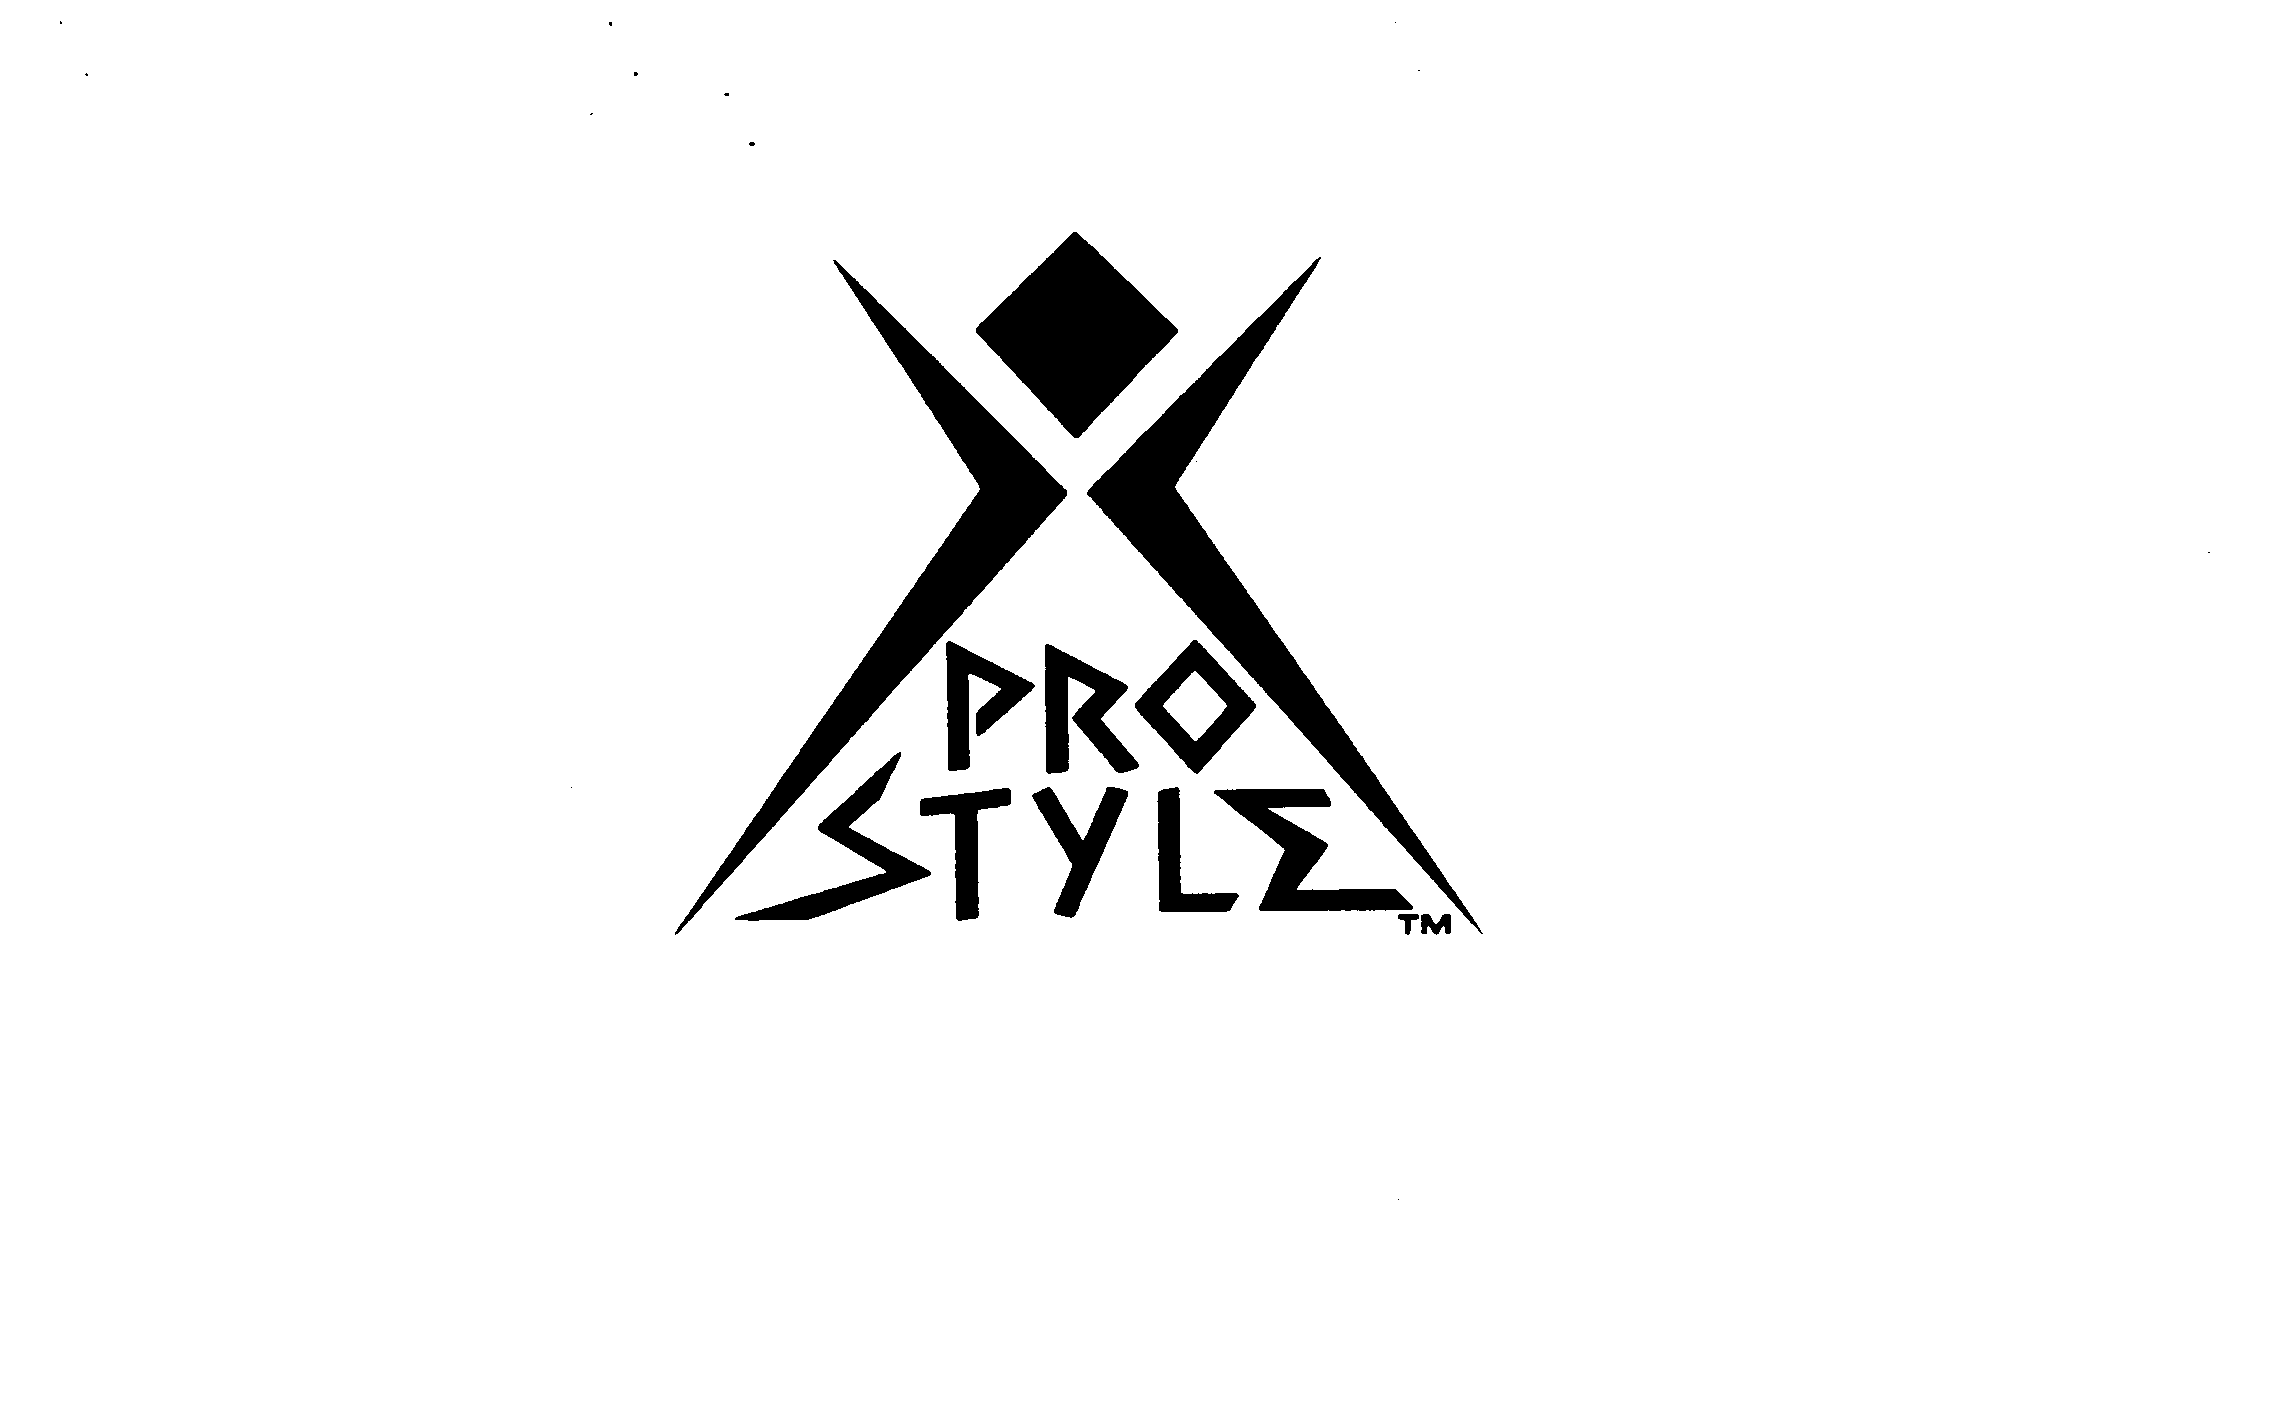 Trademark Logo PRO STYLE